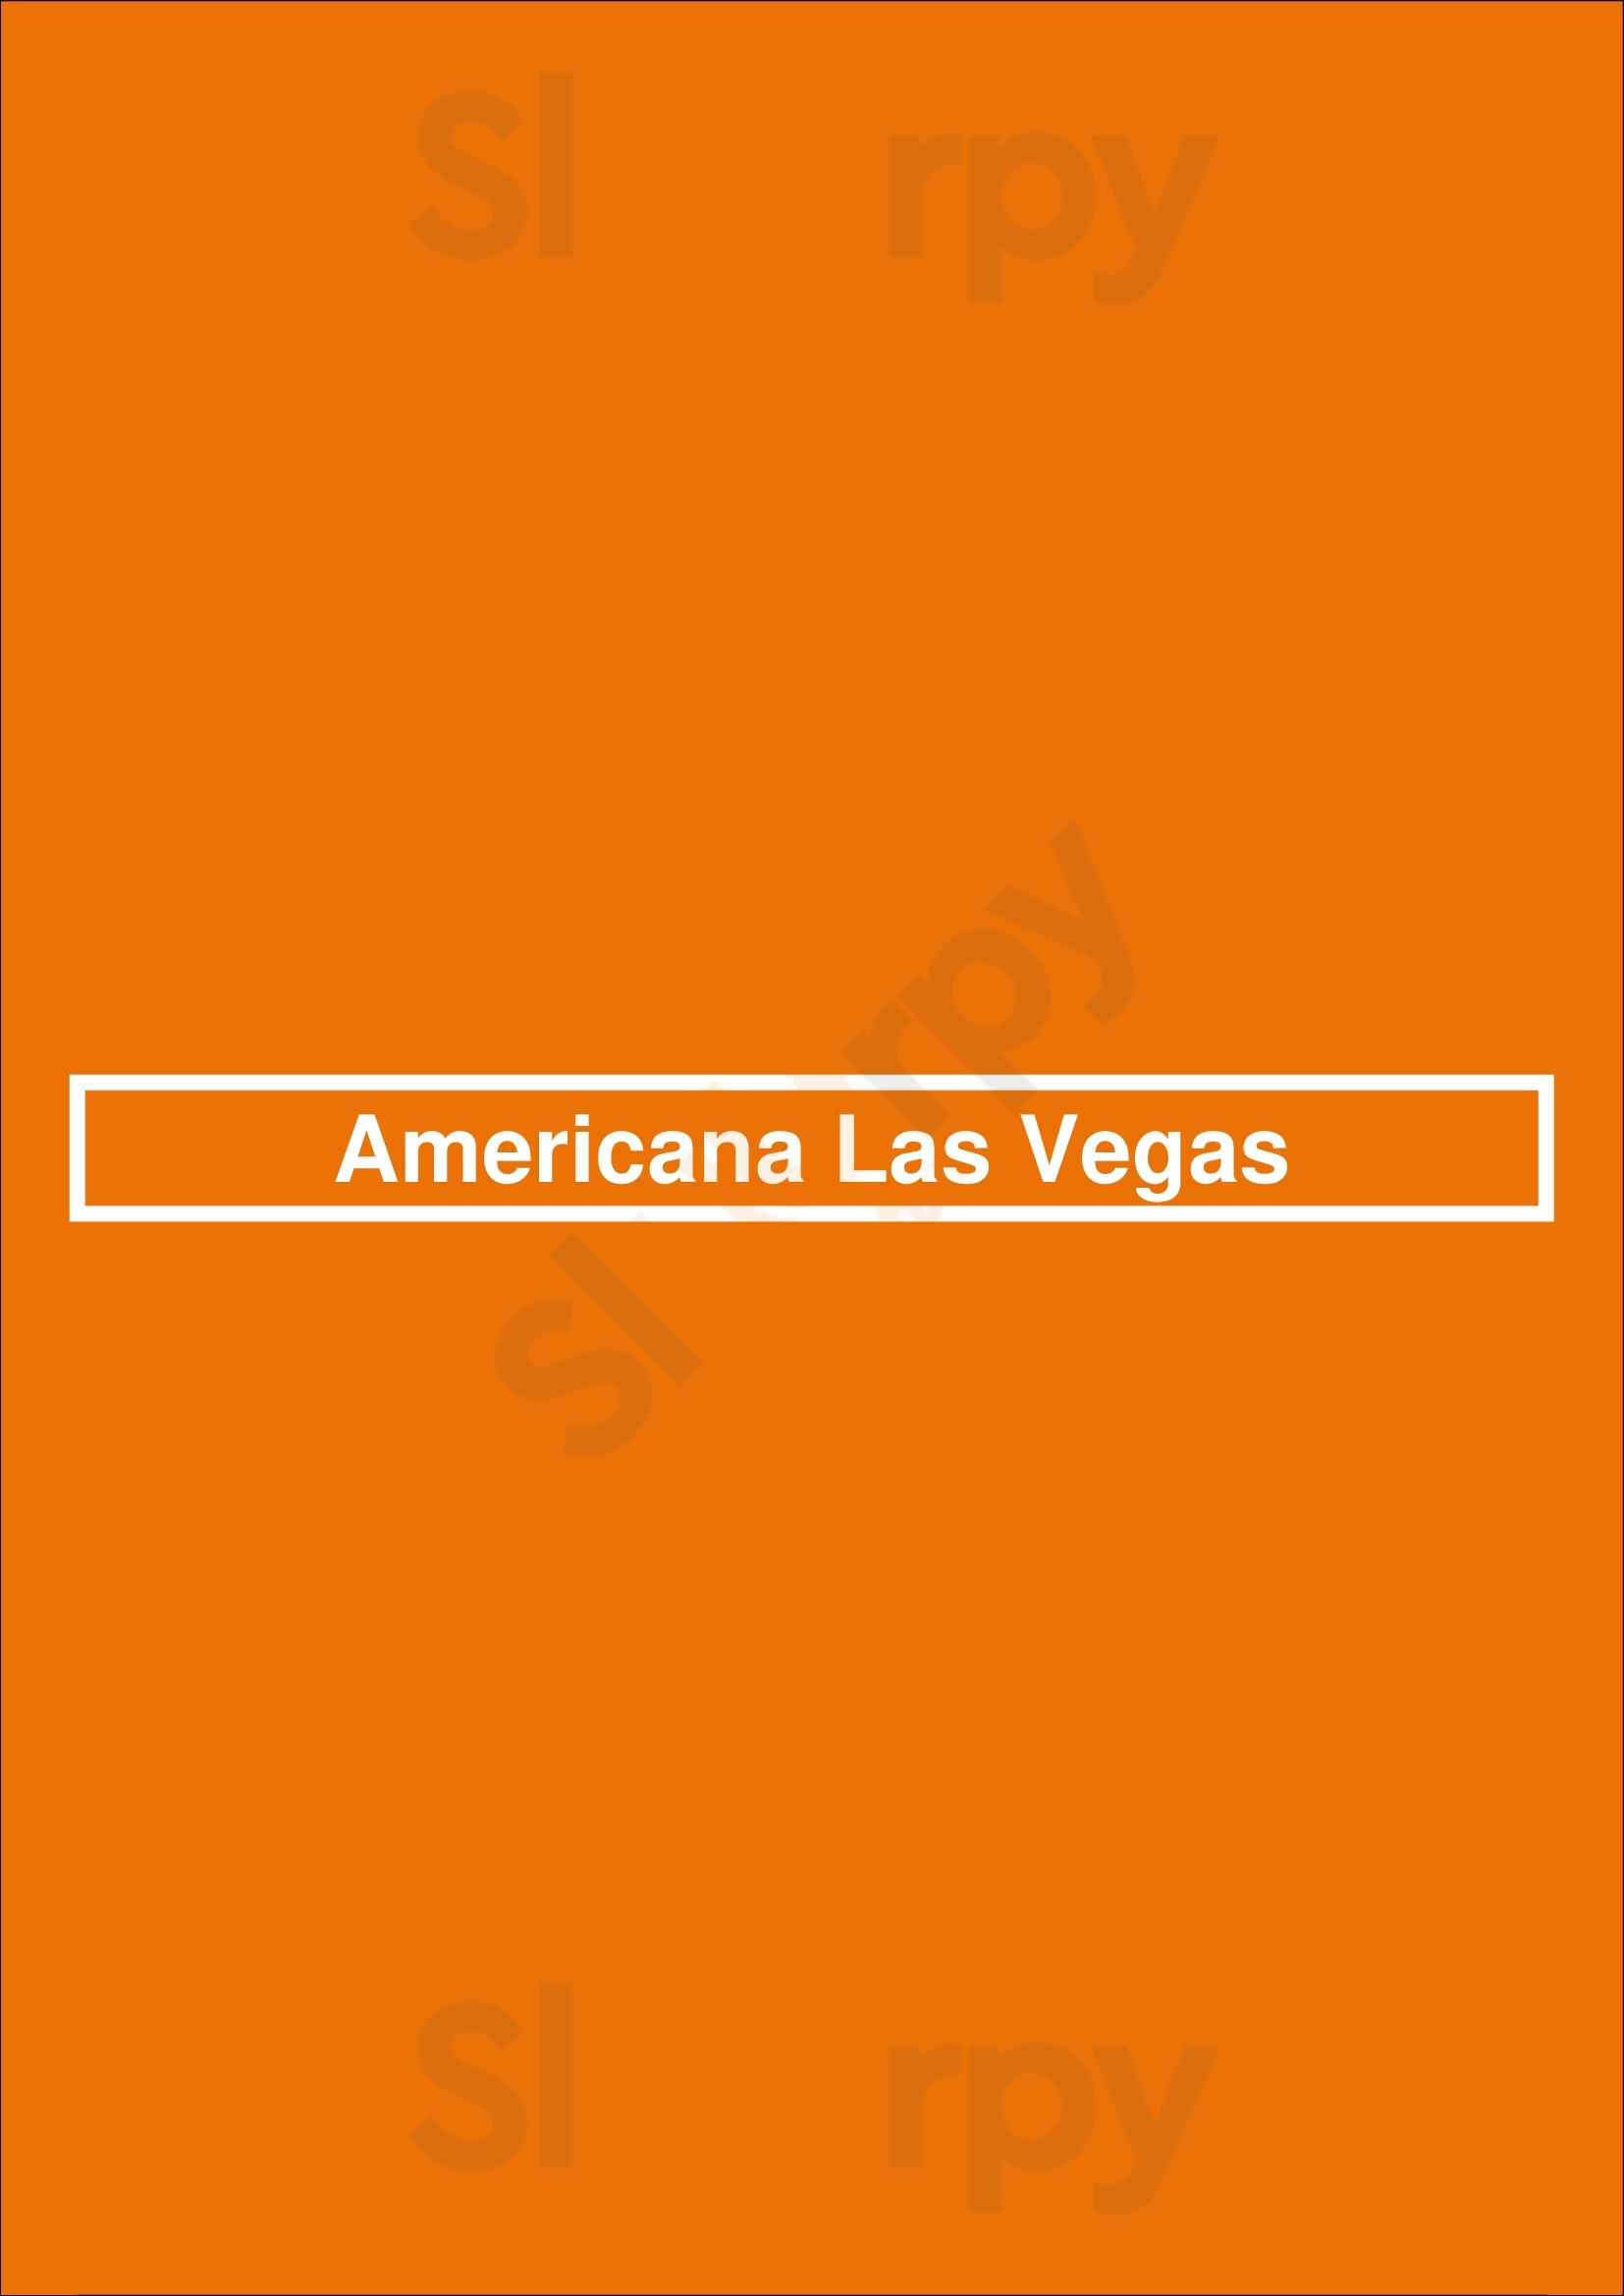 Americana Las Vegas Las Vegas Menu - 1